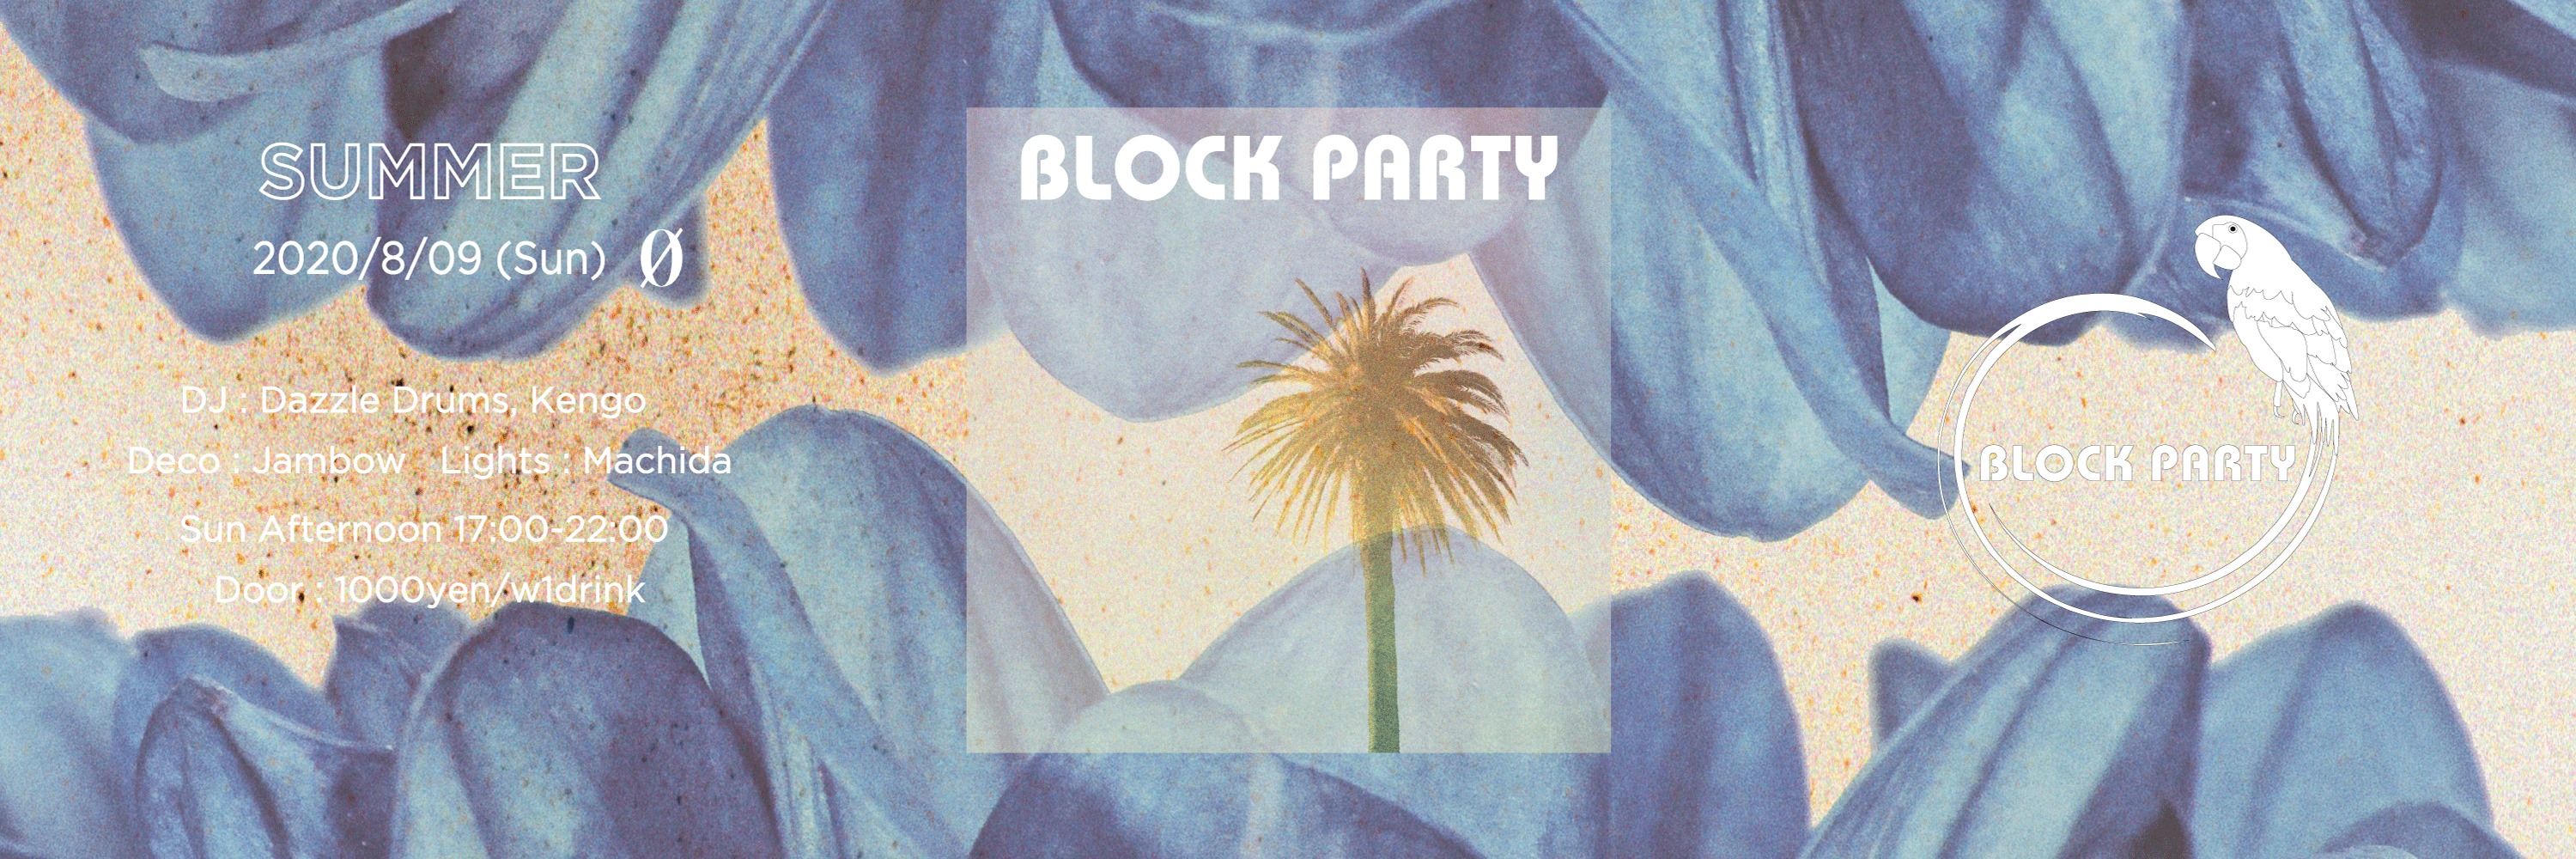 Block Party "Summer"